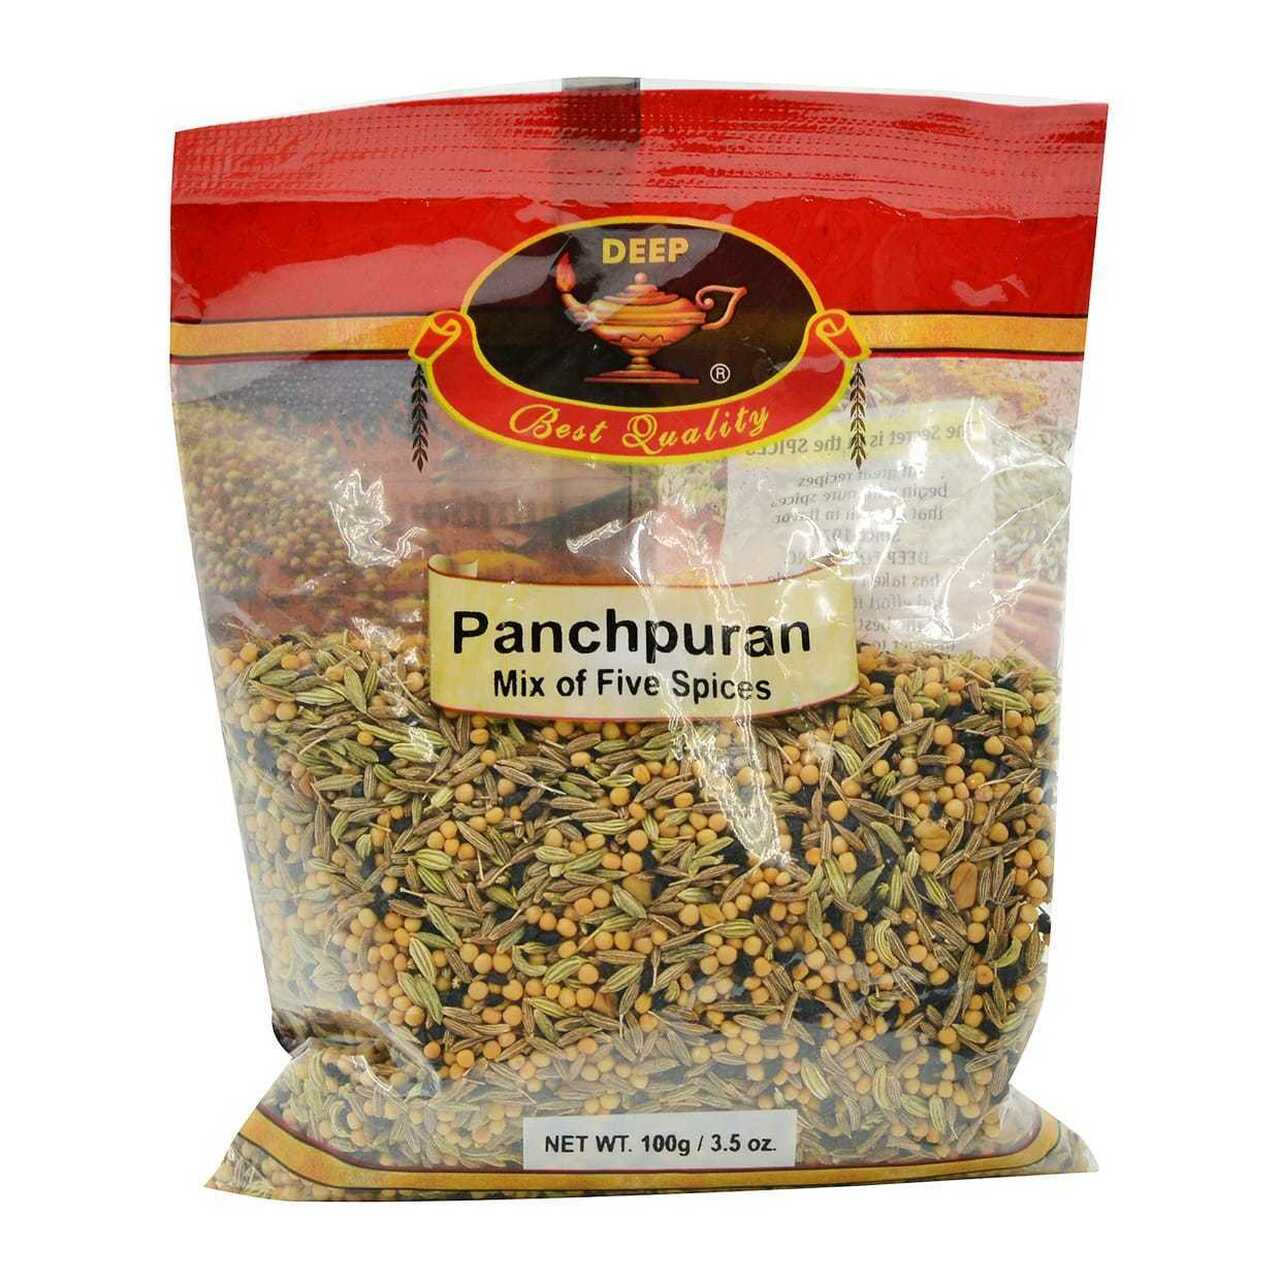 Panchpuran Mix of Five Spices